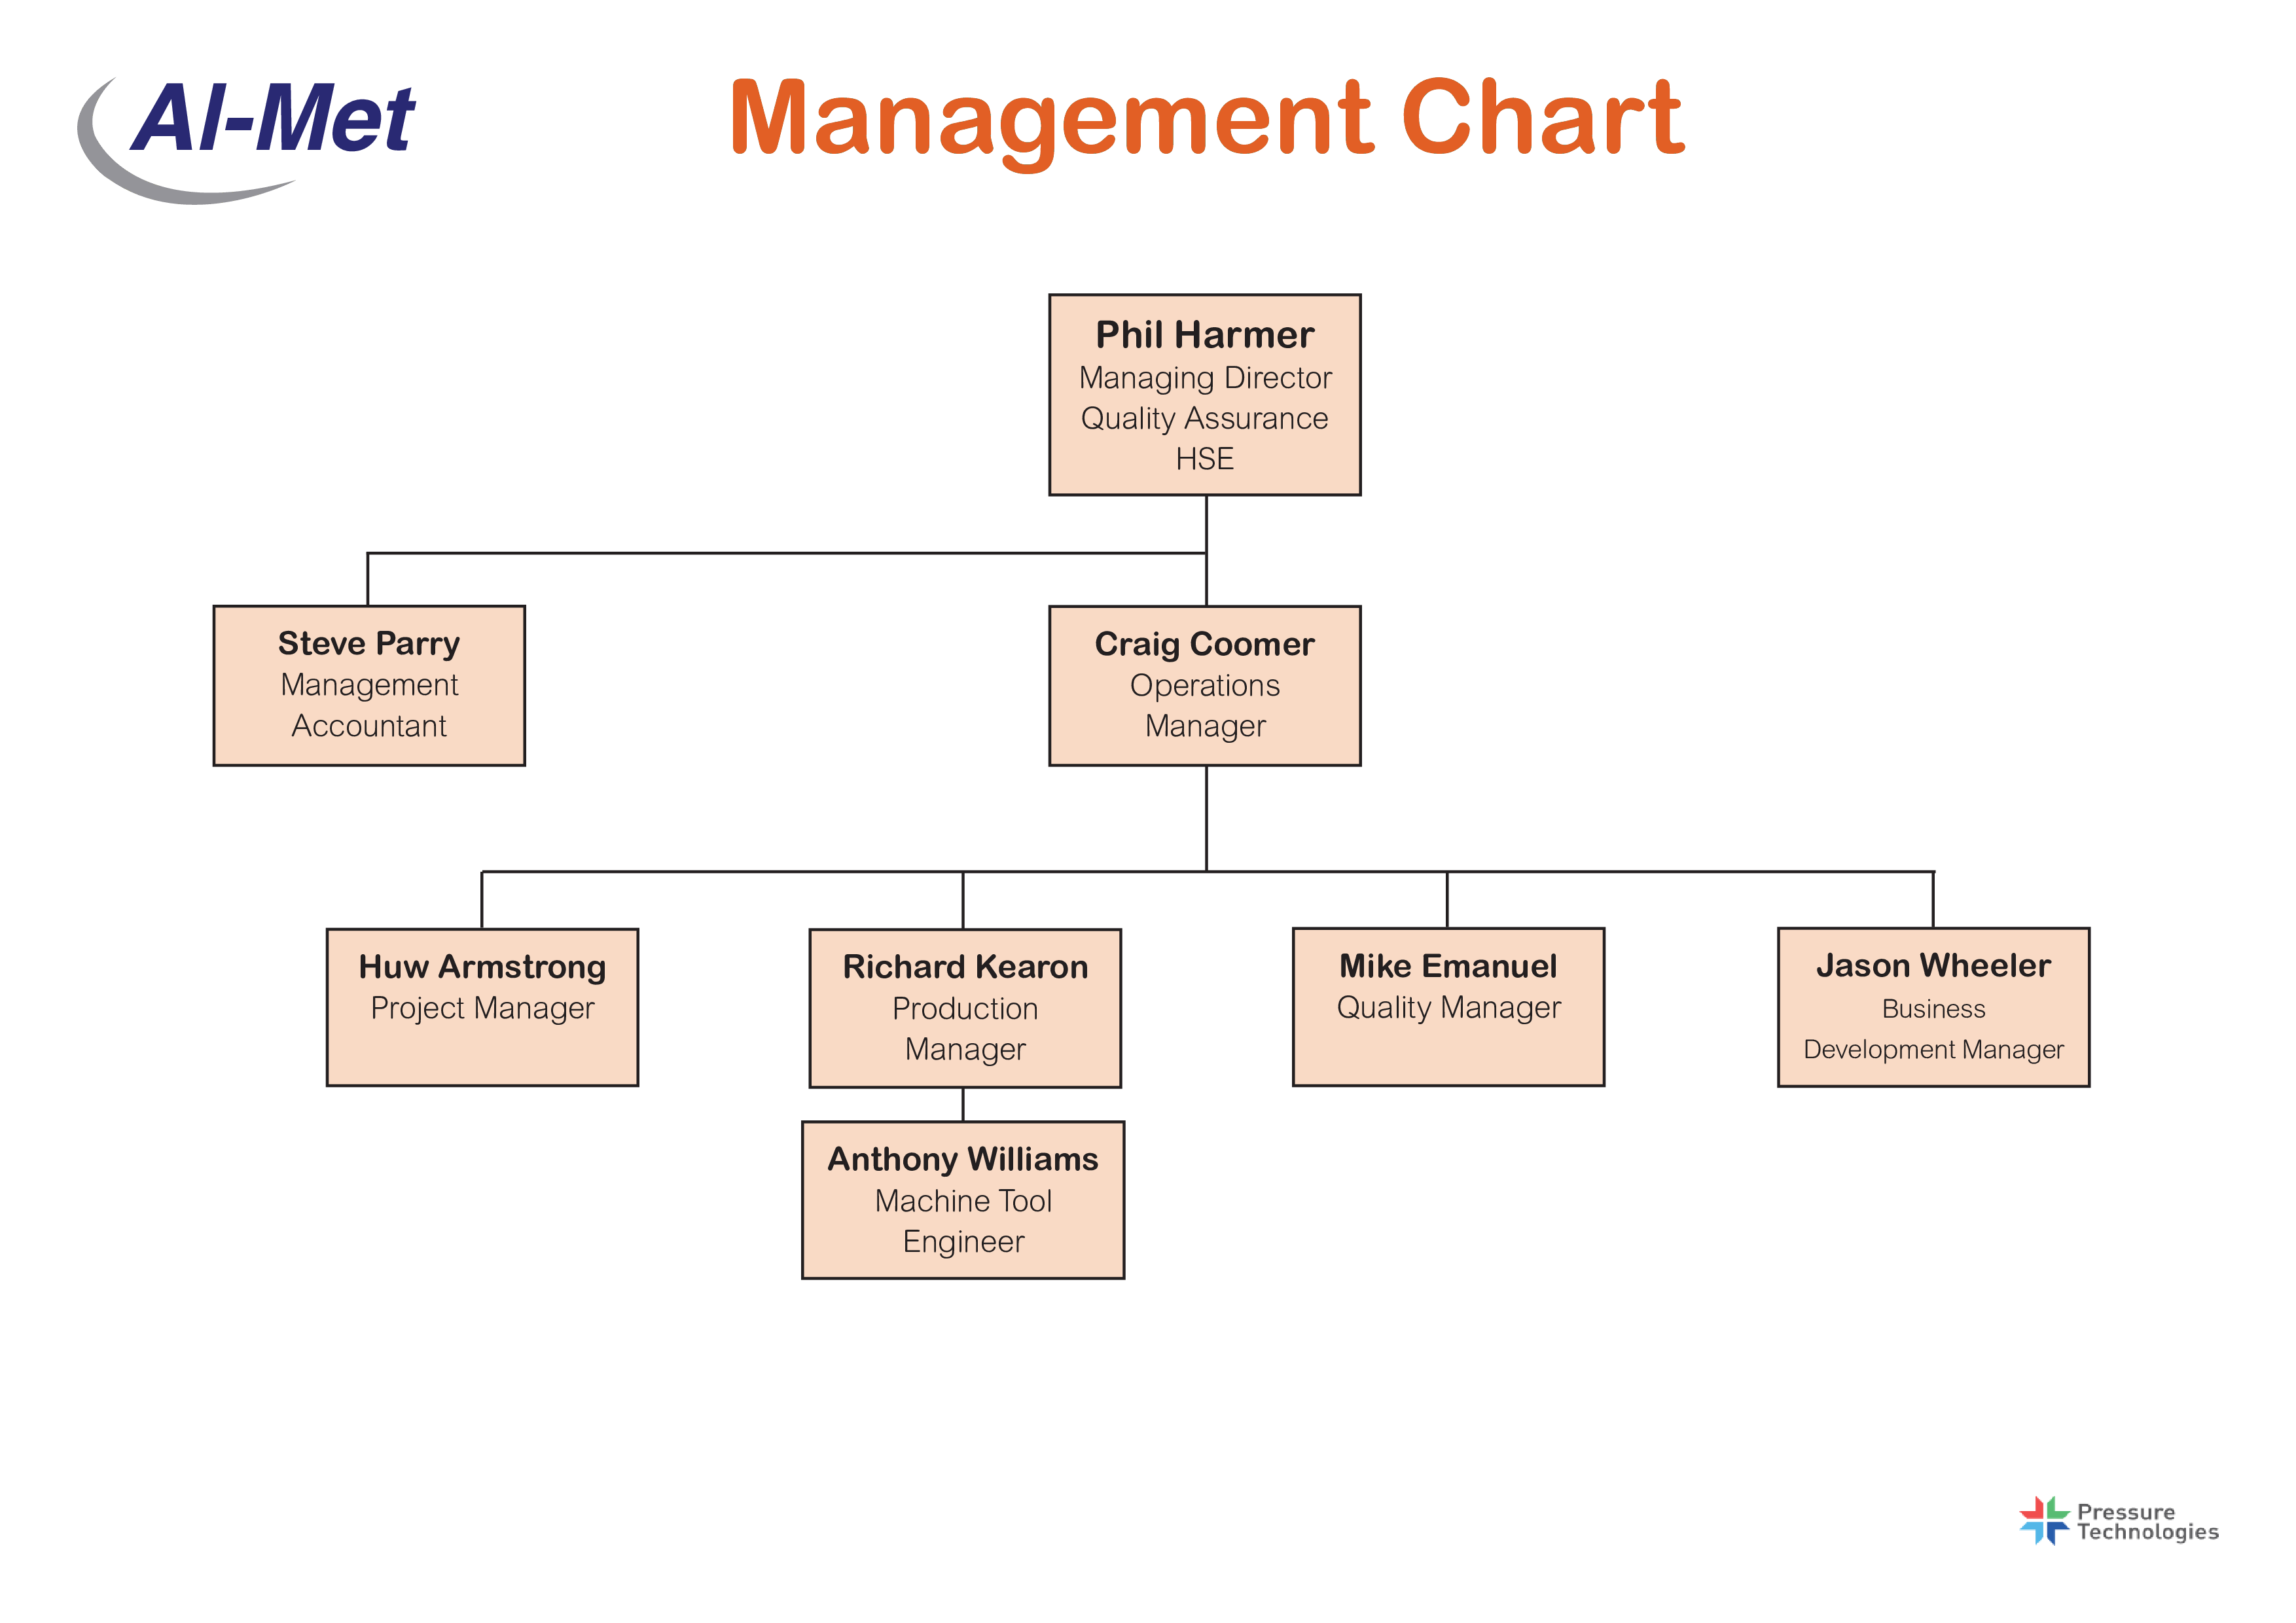 Management Chart main image